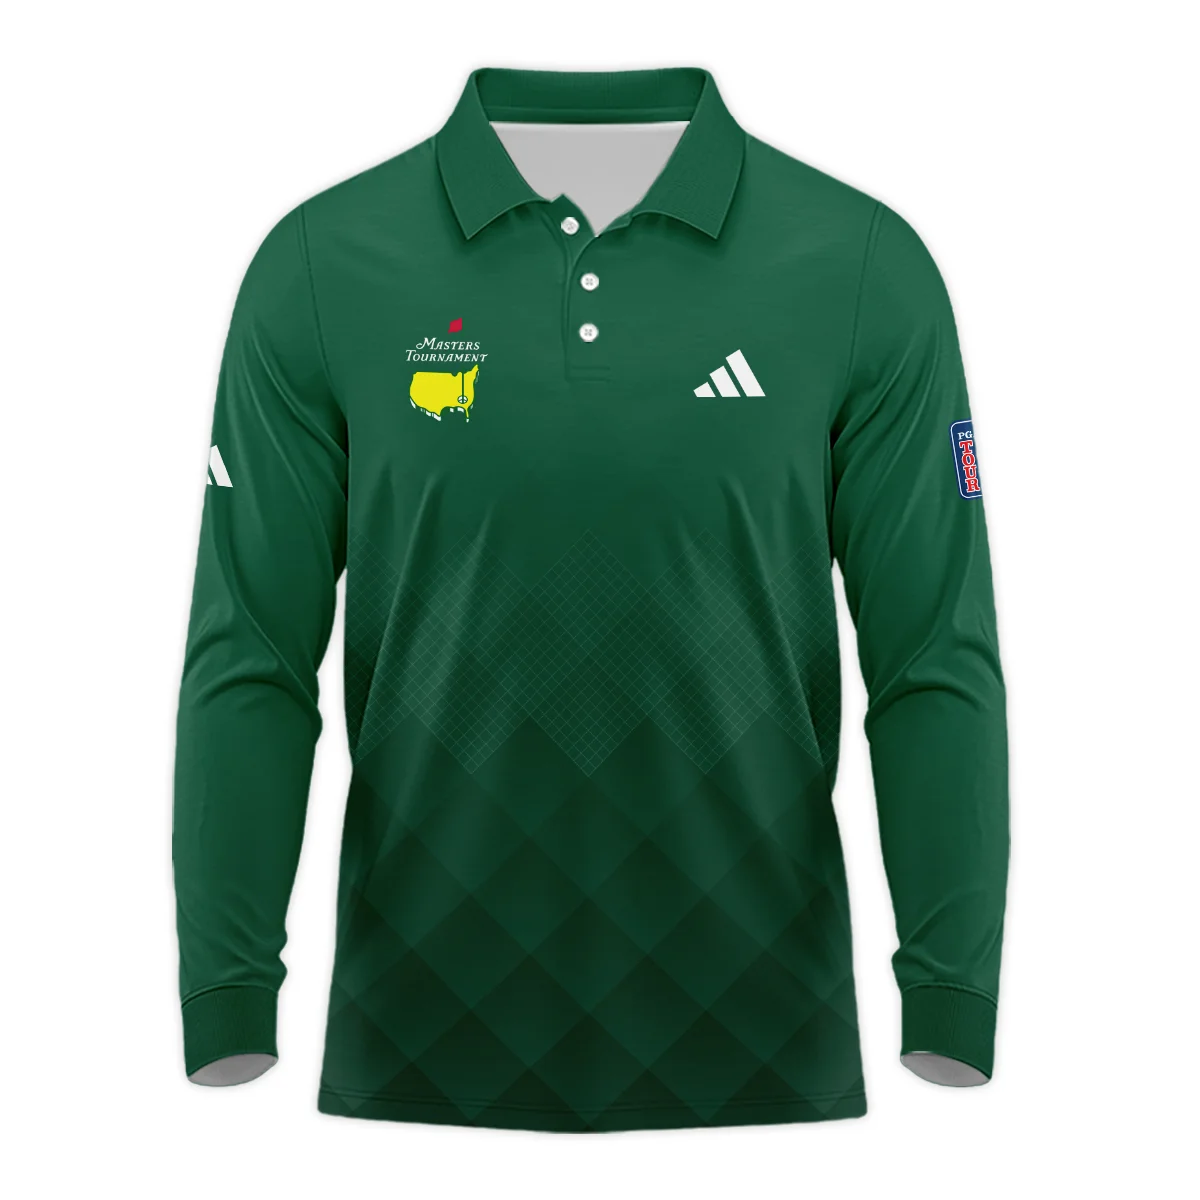 Masters Tournament Adidas Gradient Dark Green Pattern Unisex Sweatshirt Style Classic Sweatshirt